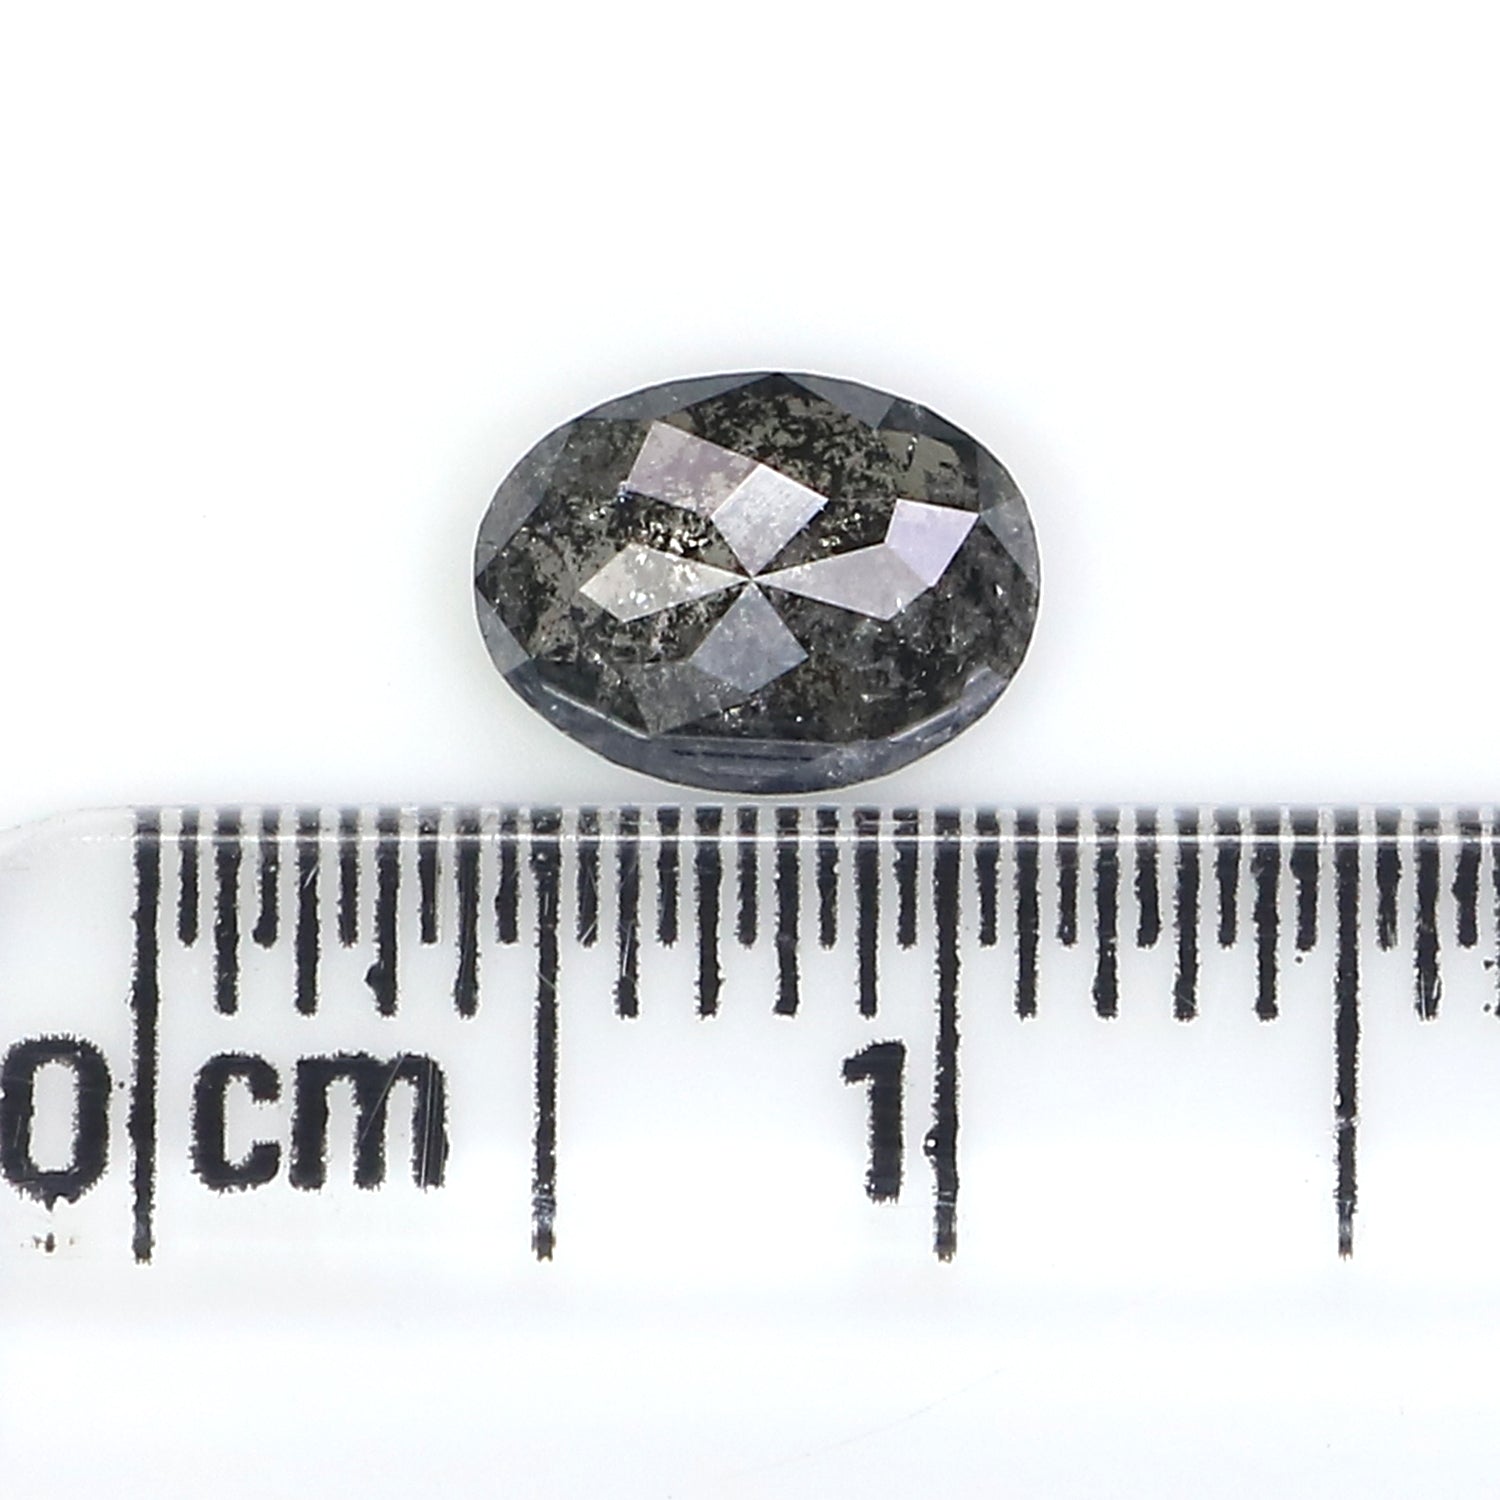 Natural Loose Oval Diamond, Salt And Pepper Oval Diamond, Natural Loose Diamond, Oval Rose Cut Diamond, 0.80 CT Oval Shape Diamond KR2708